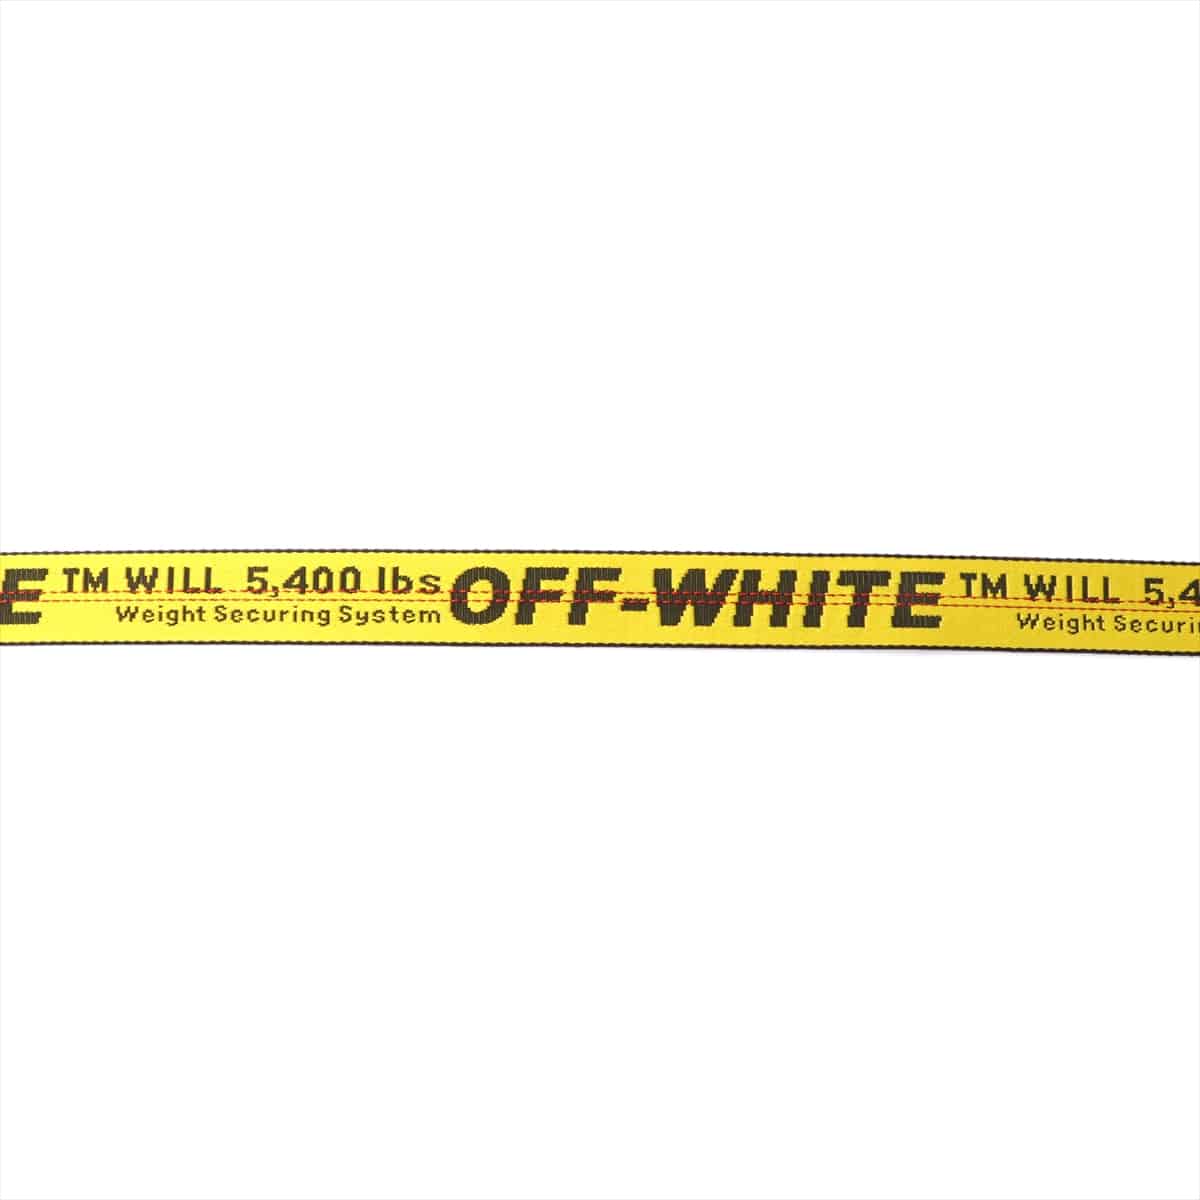 Off-White Belt Polyamide Yellow